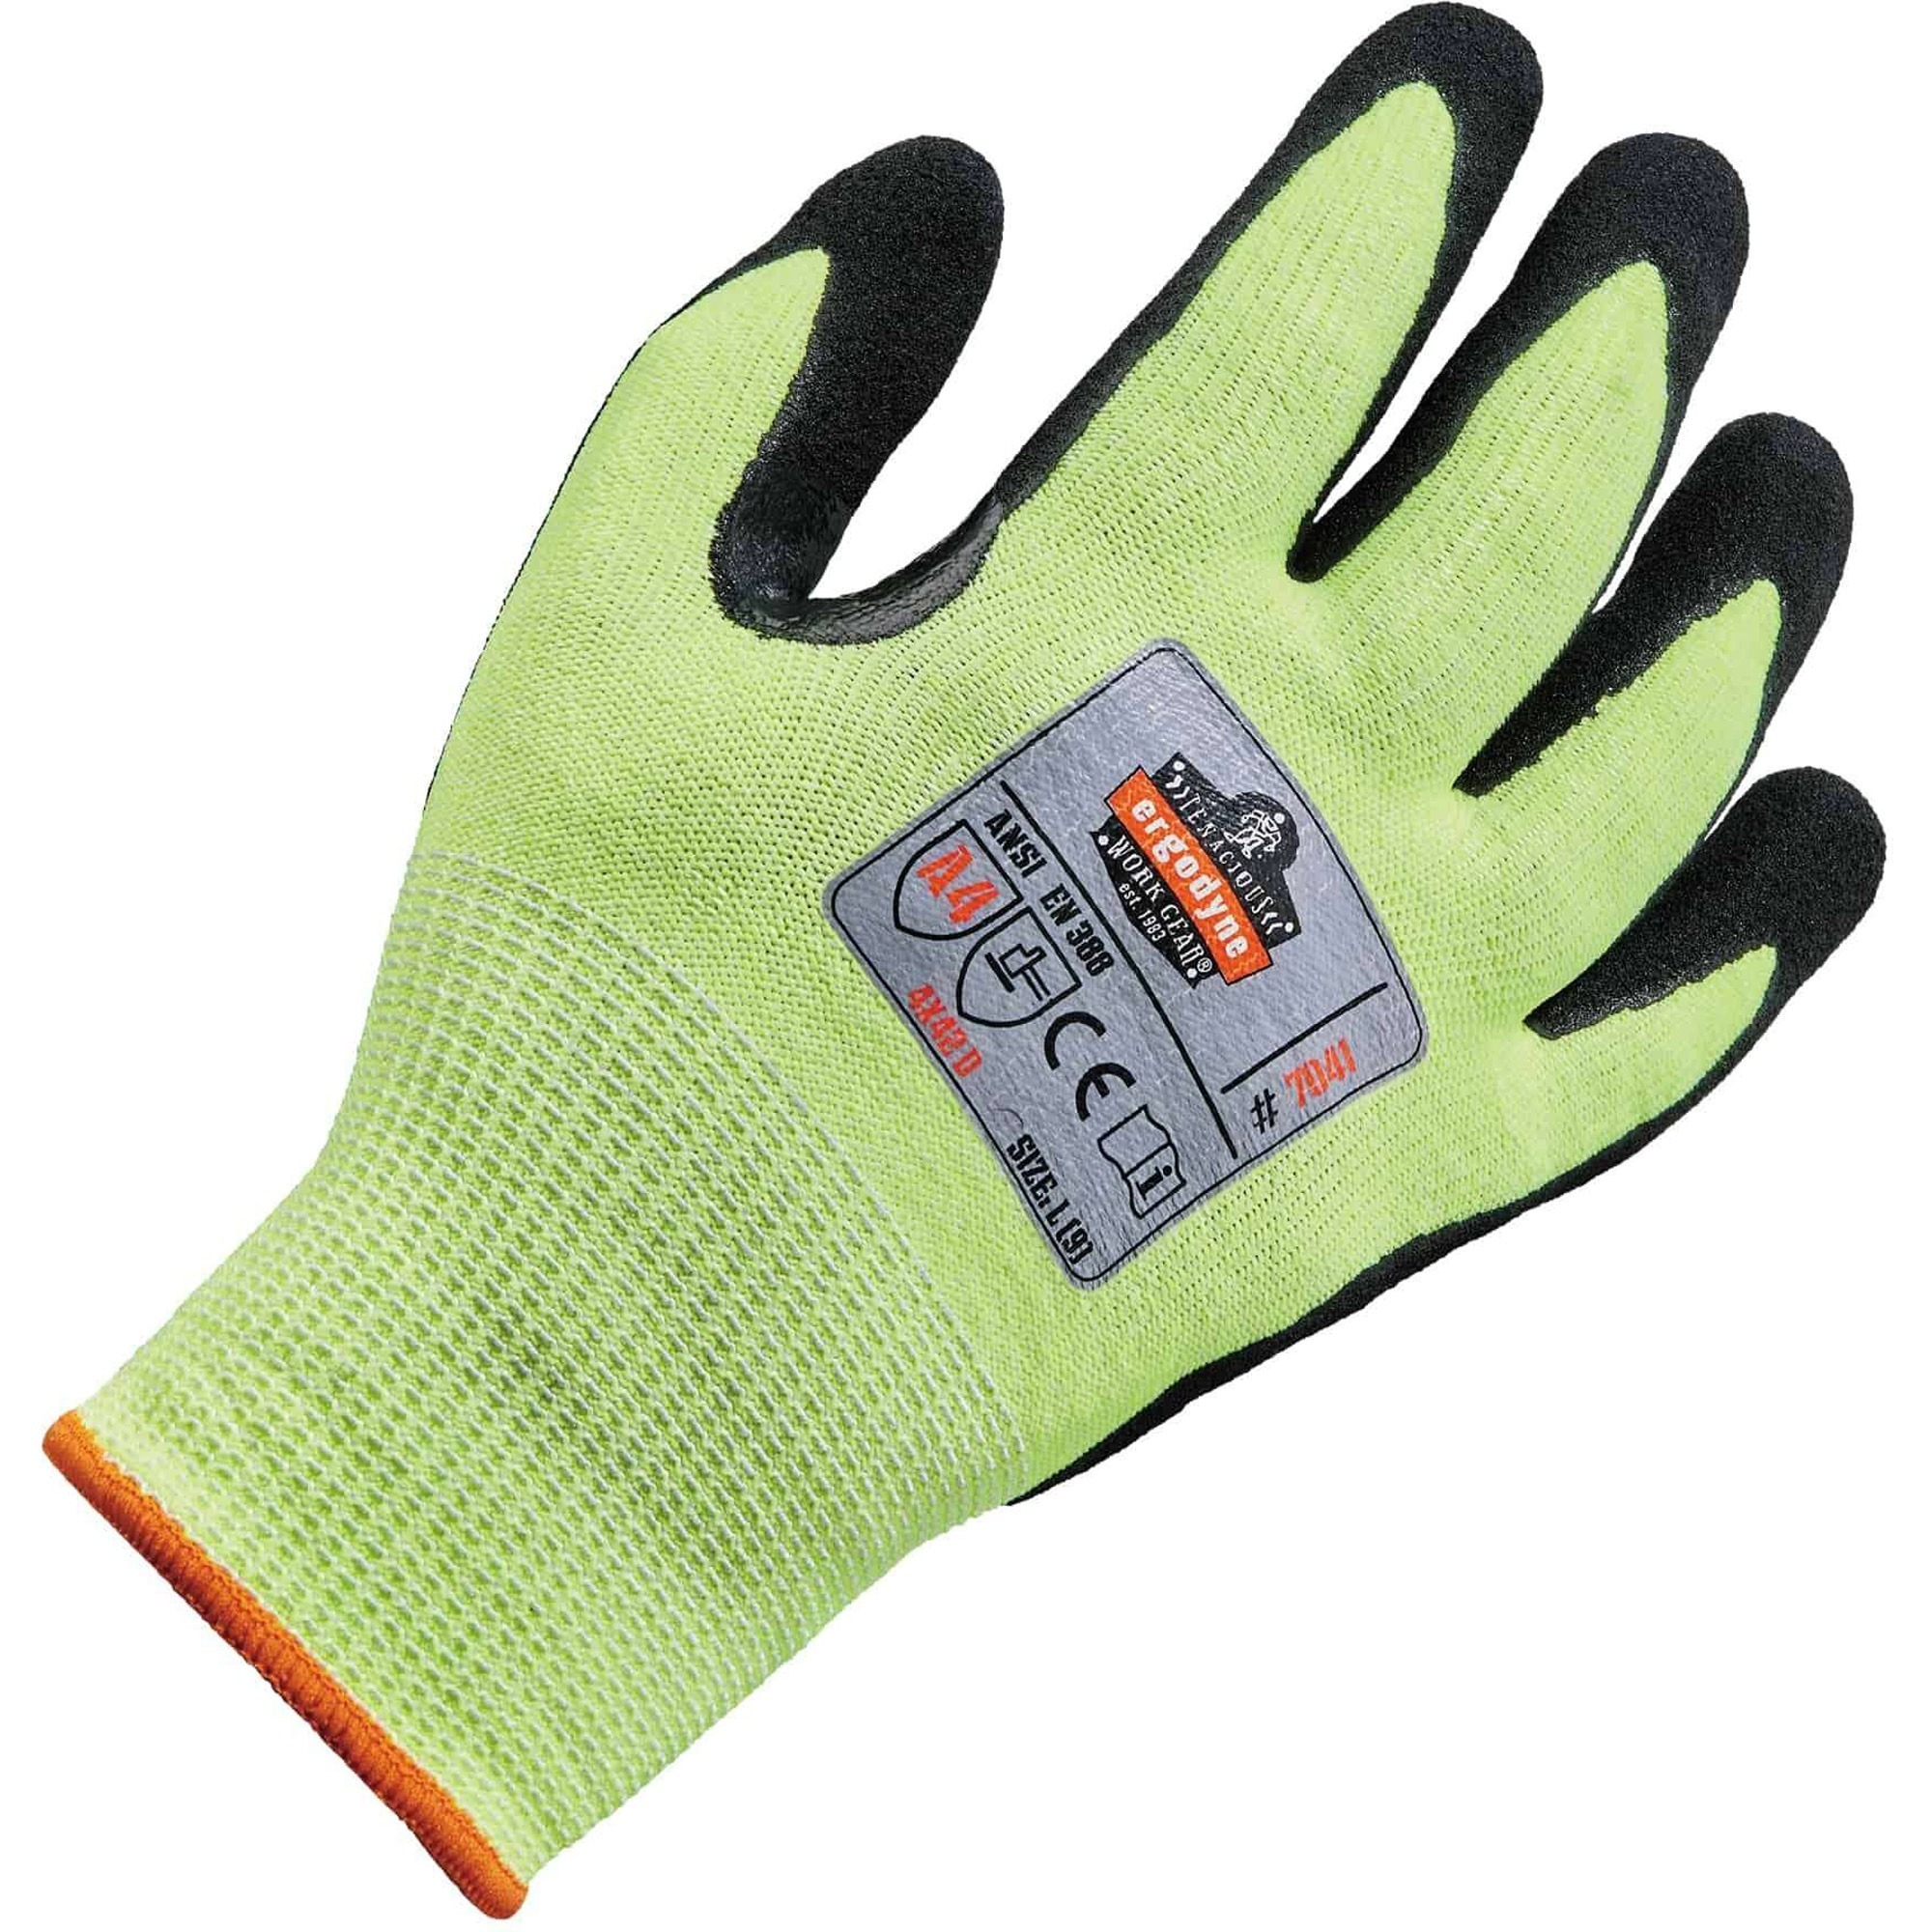 ProFlex® 922CR Nitrile-Coated Cut-Resistant Gloves - ANSI Level A3